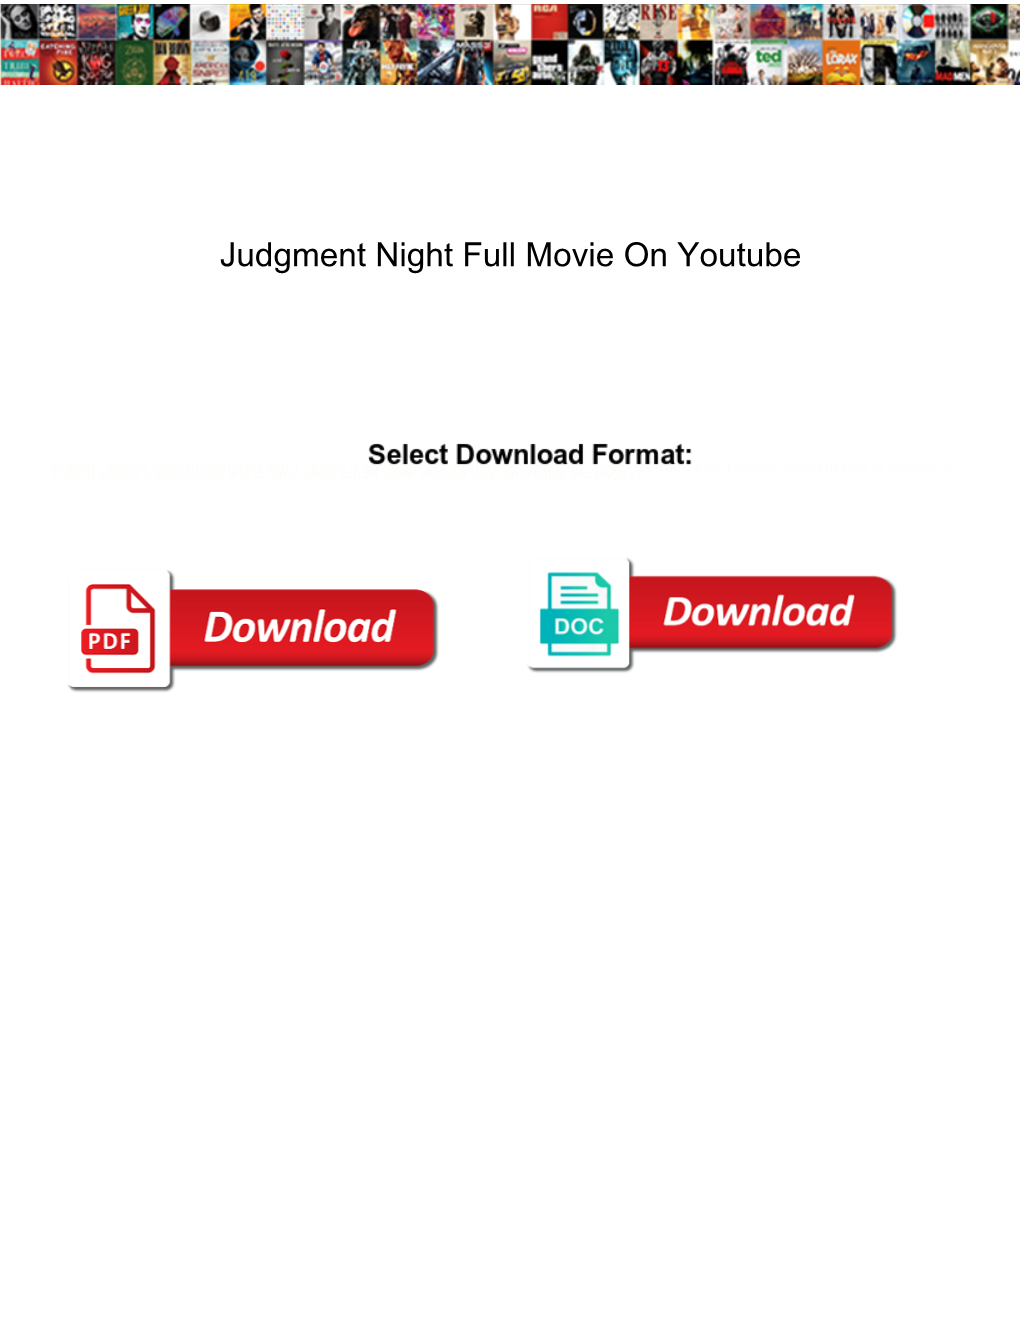 Judgment Night Full Movie on Youtube